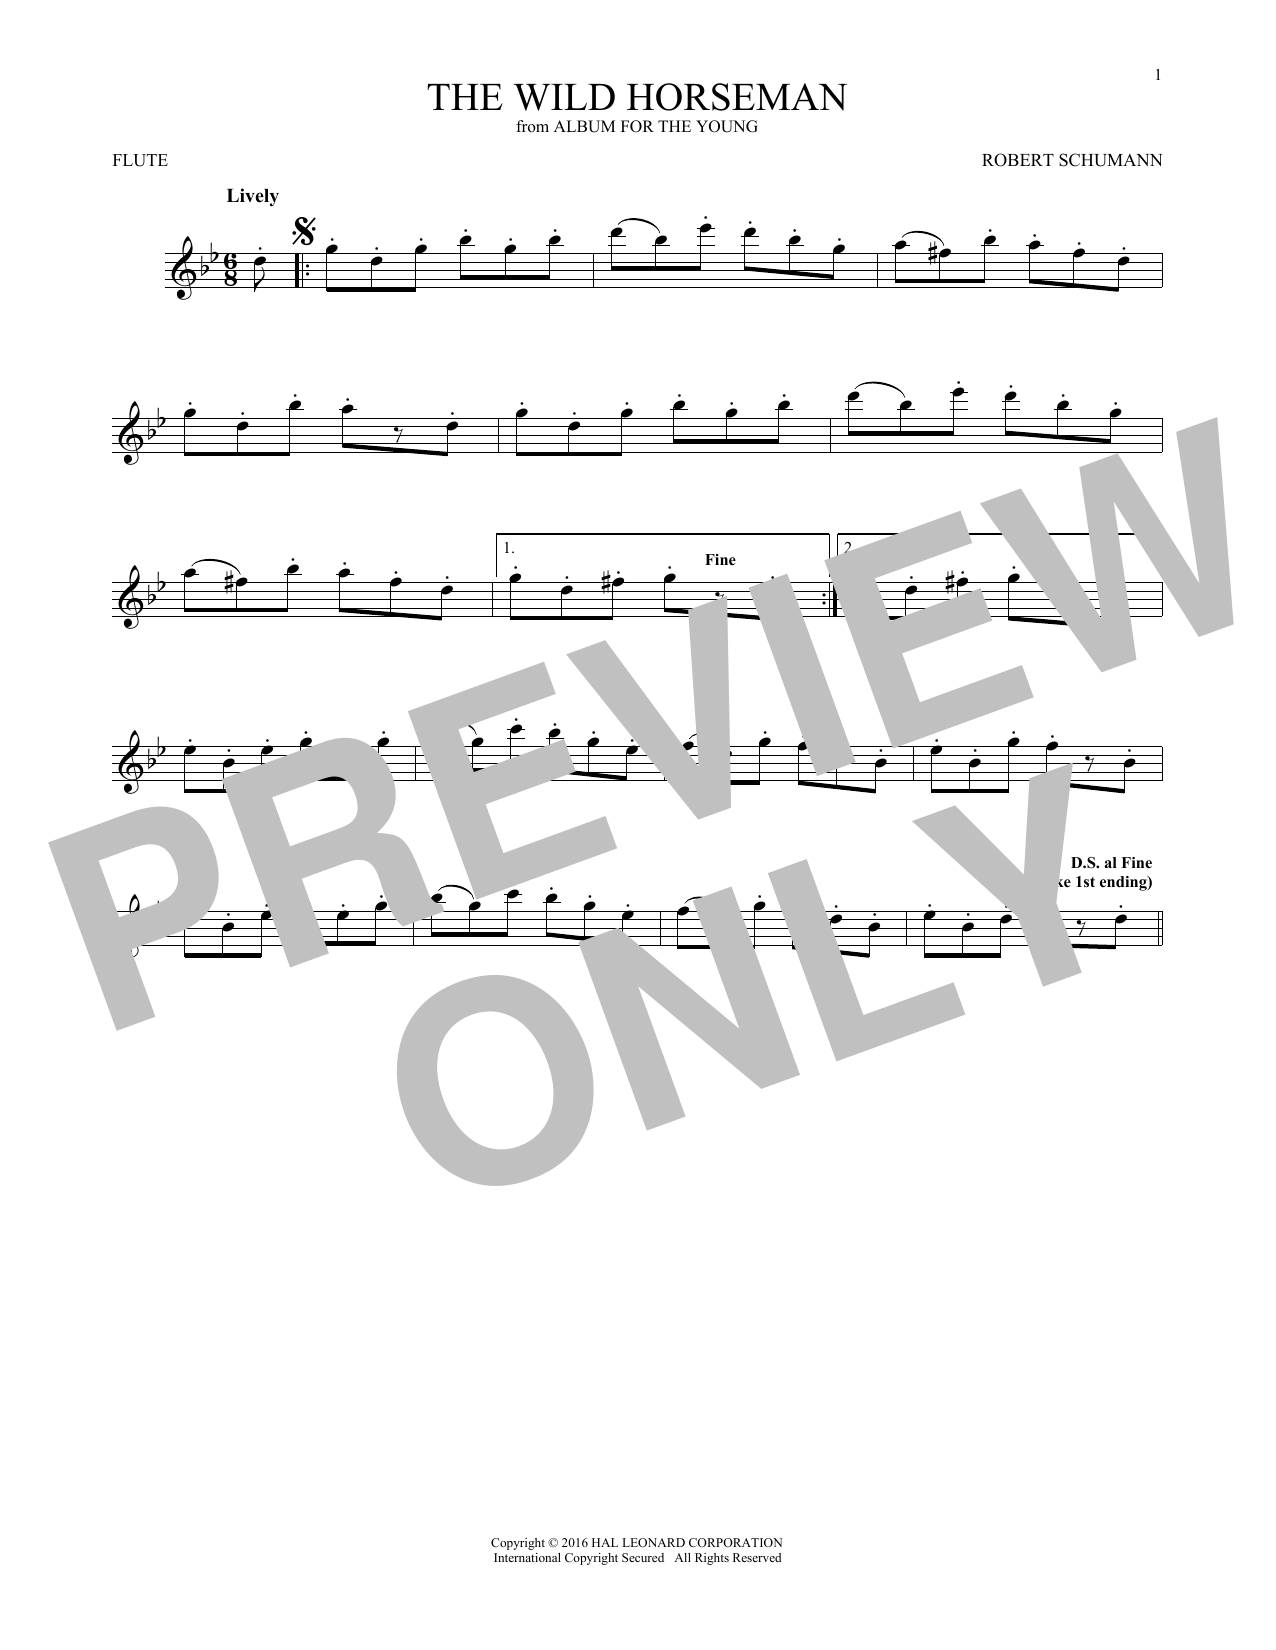 Robert Schumann The Wild Horseman (Wilder Reiter), Op. 68, No. 8 Sheet Music Notes & Chords for French Horn - Download or Print PDF